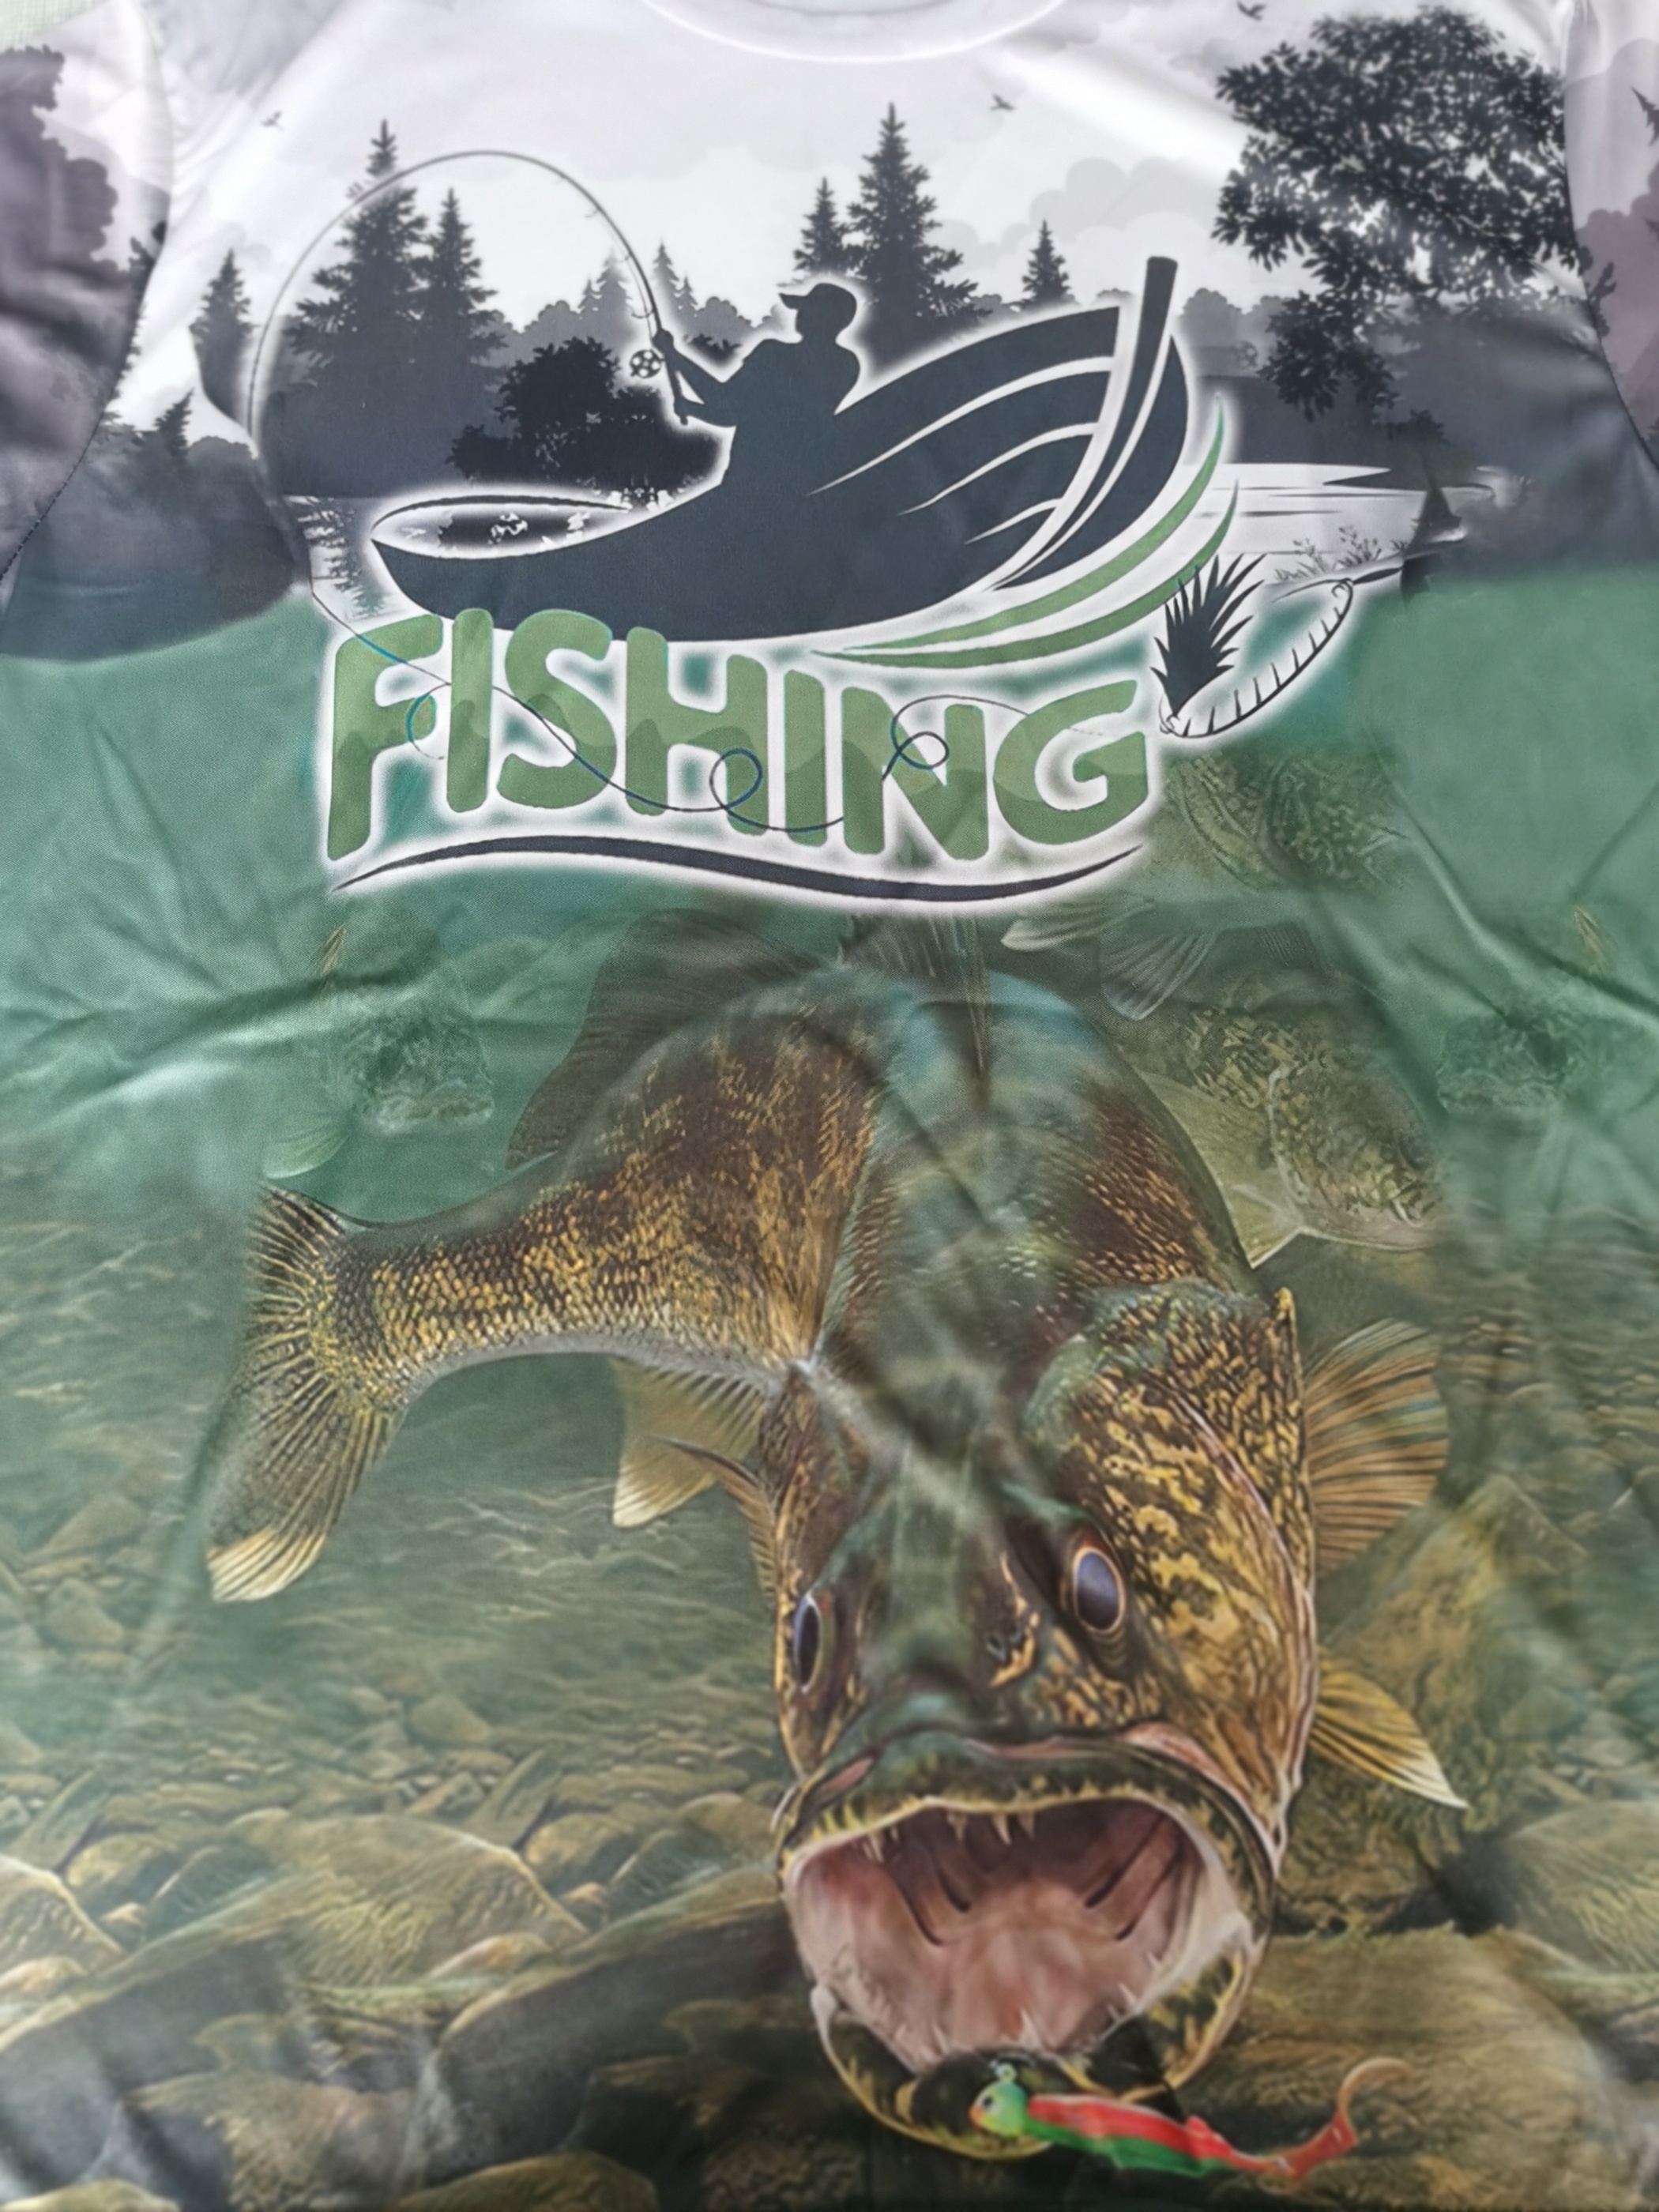 Cheap Fishing Shirt for Men 3D Printed Fish Graphic Funny